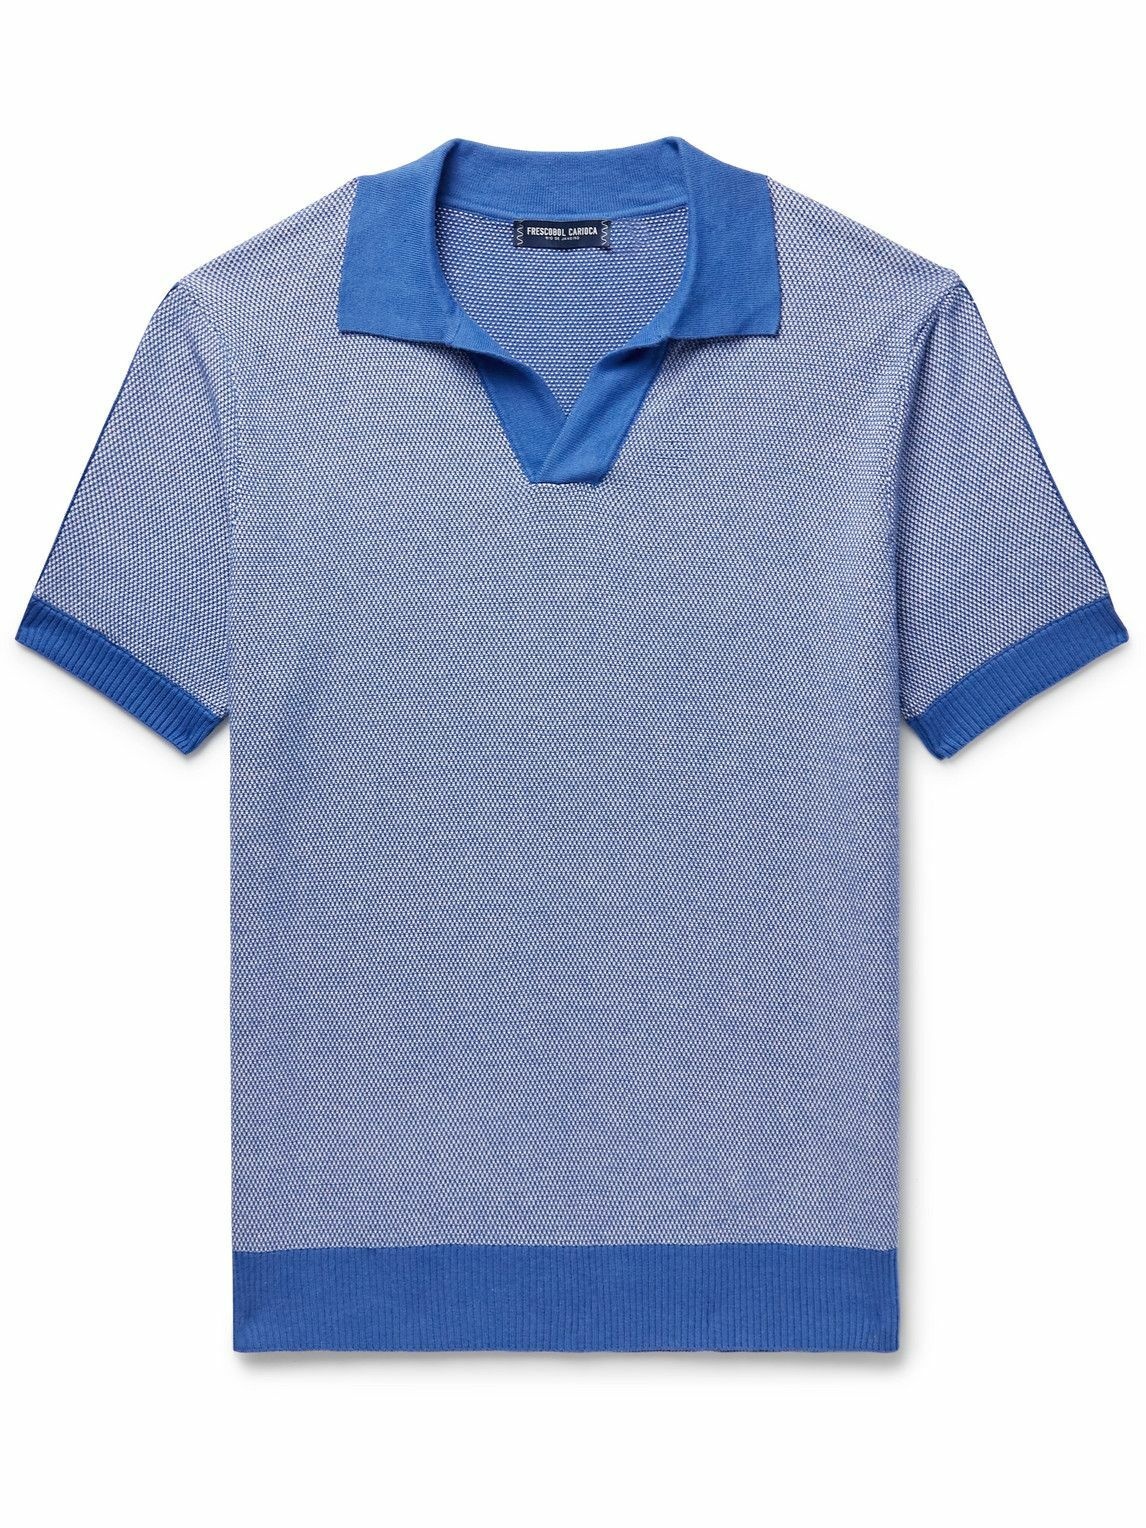 Polo Blue Rino Carioca - Carioca Cotton Shirt and Birdseye Frescobol Silk-Blend - Frescobol